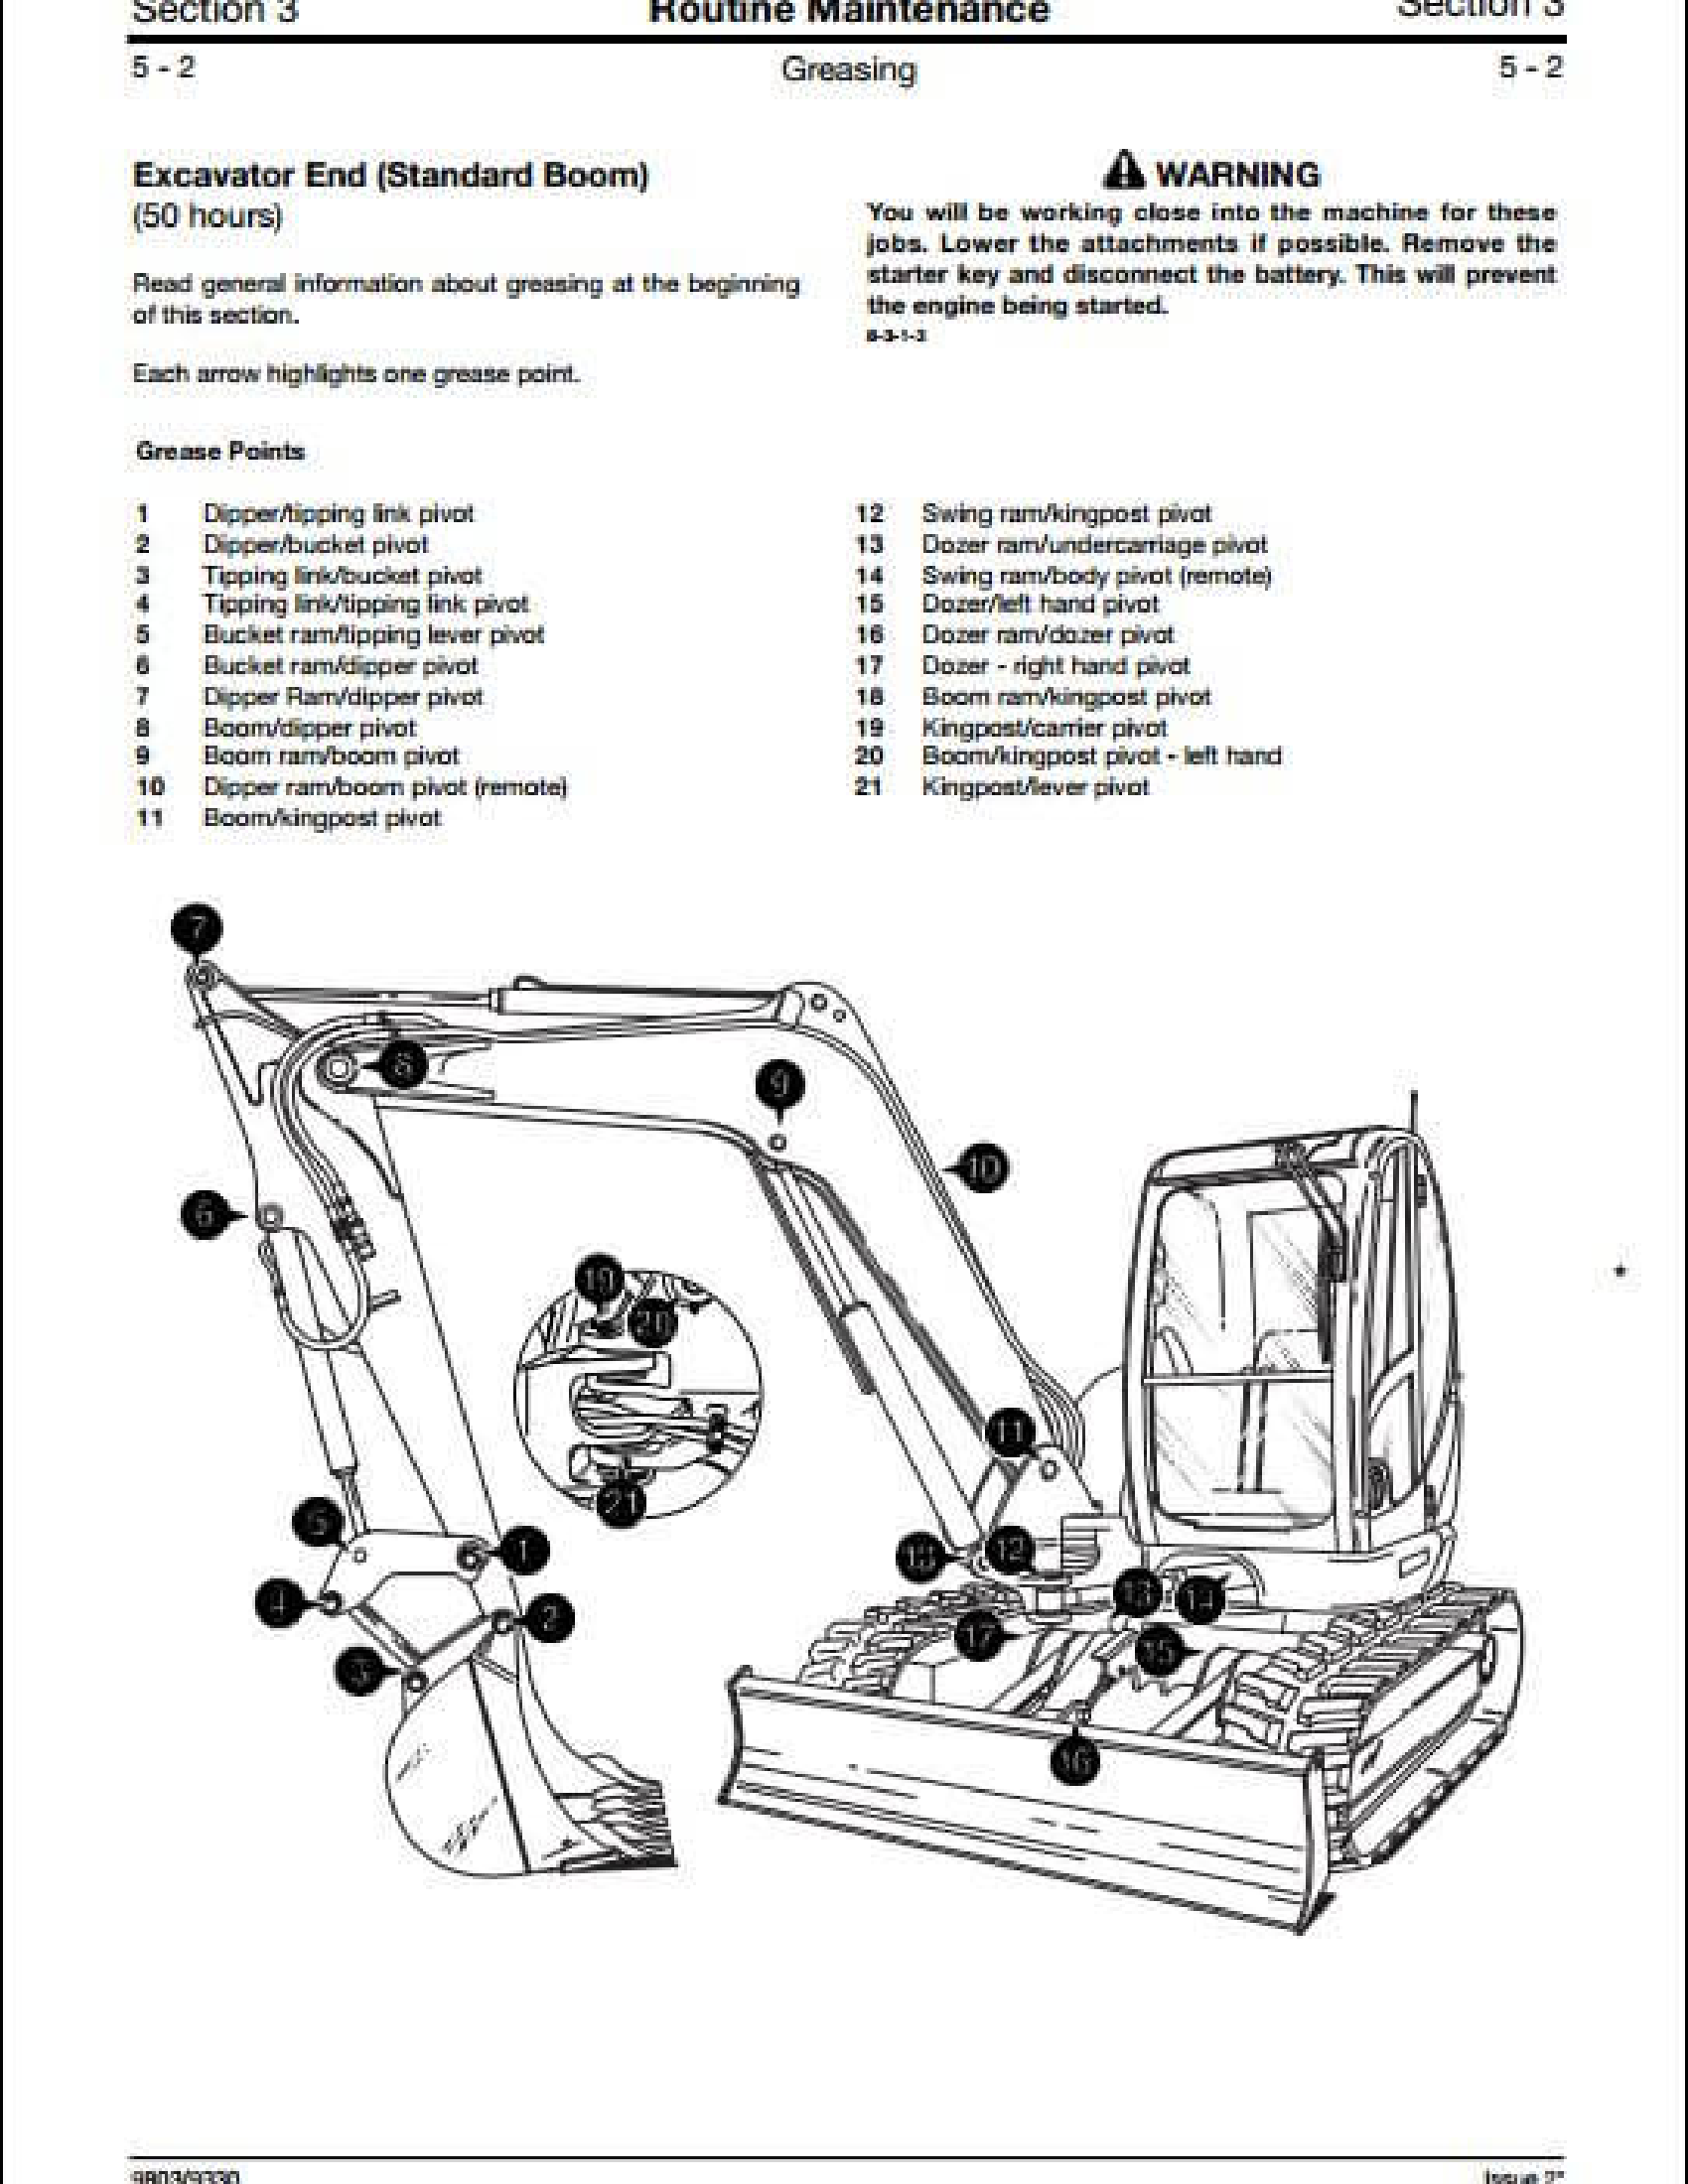 JCB No.788001 Teletruk From M/c Skid Steer Loader manual